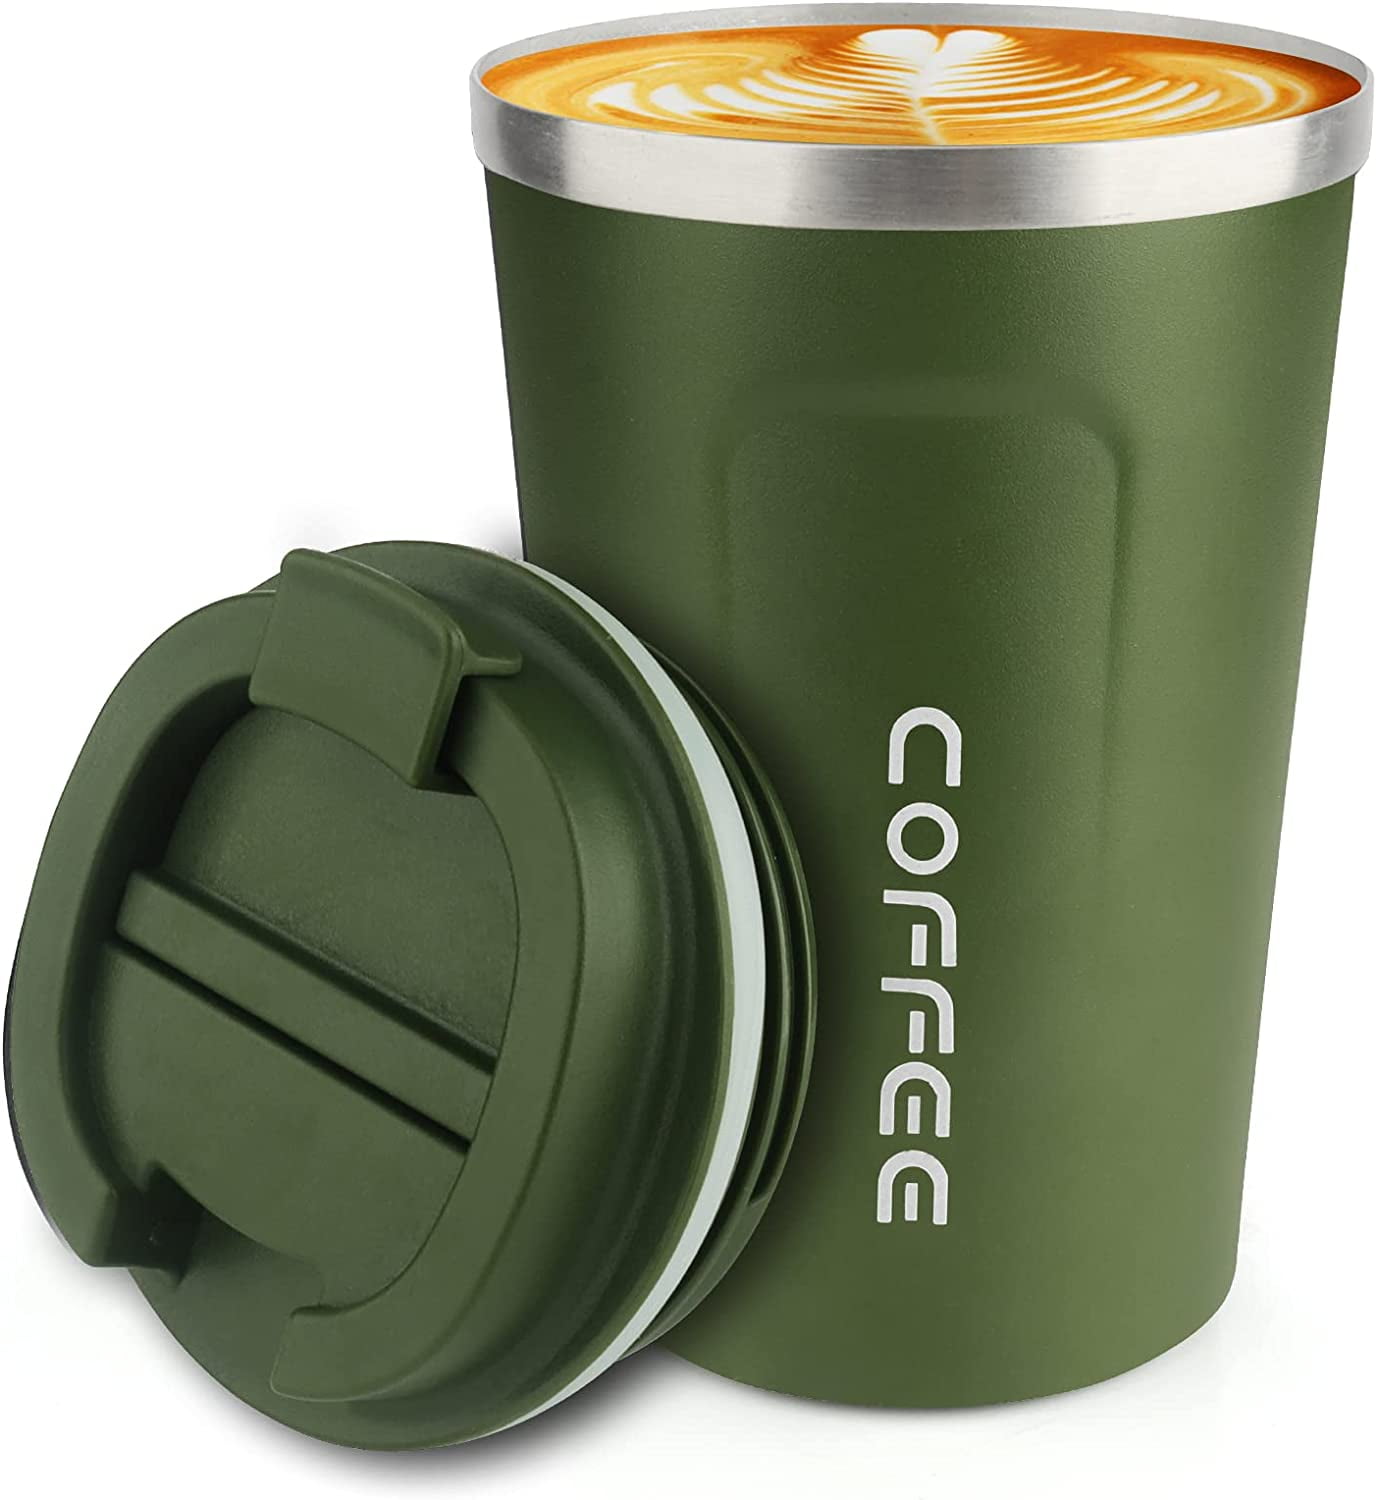 Countertop Café Travel Coffee Cup